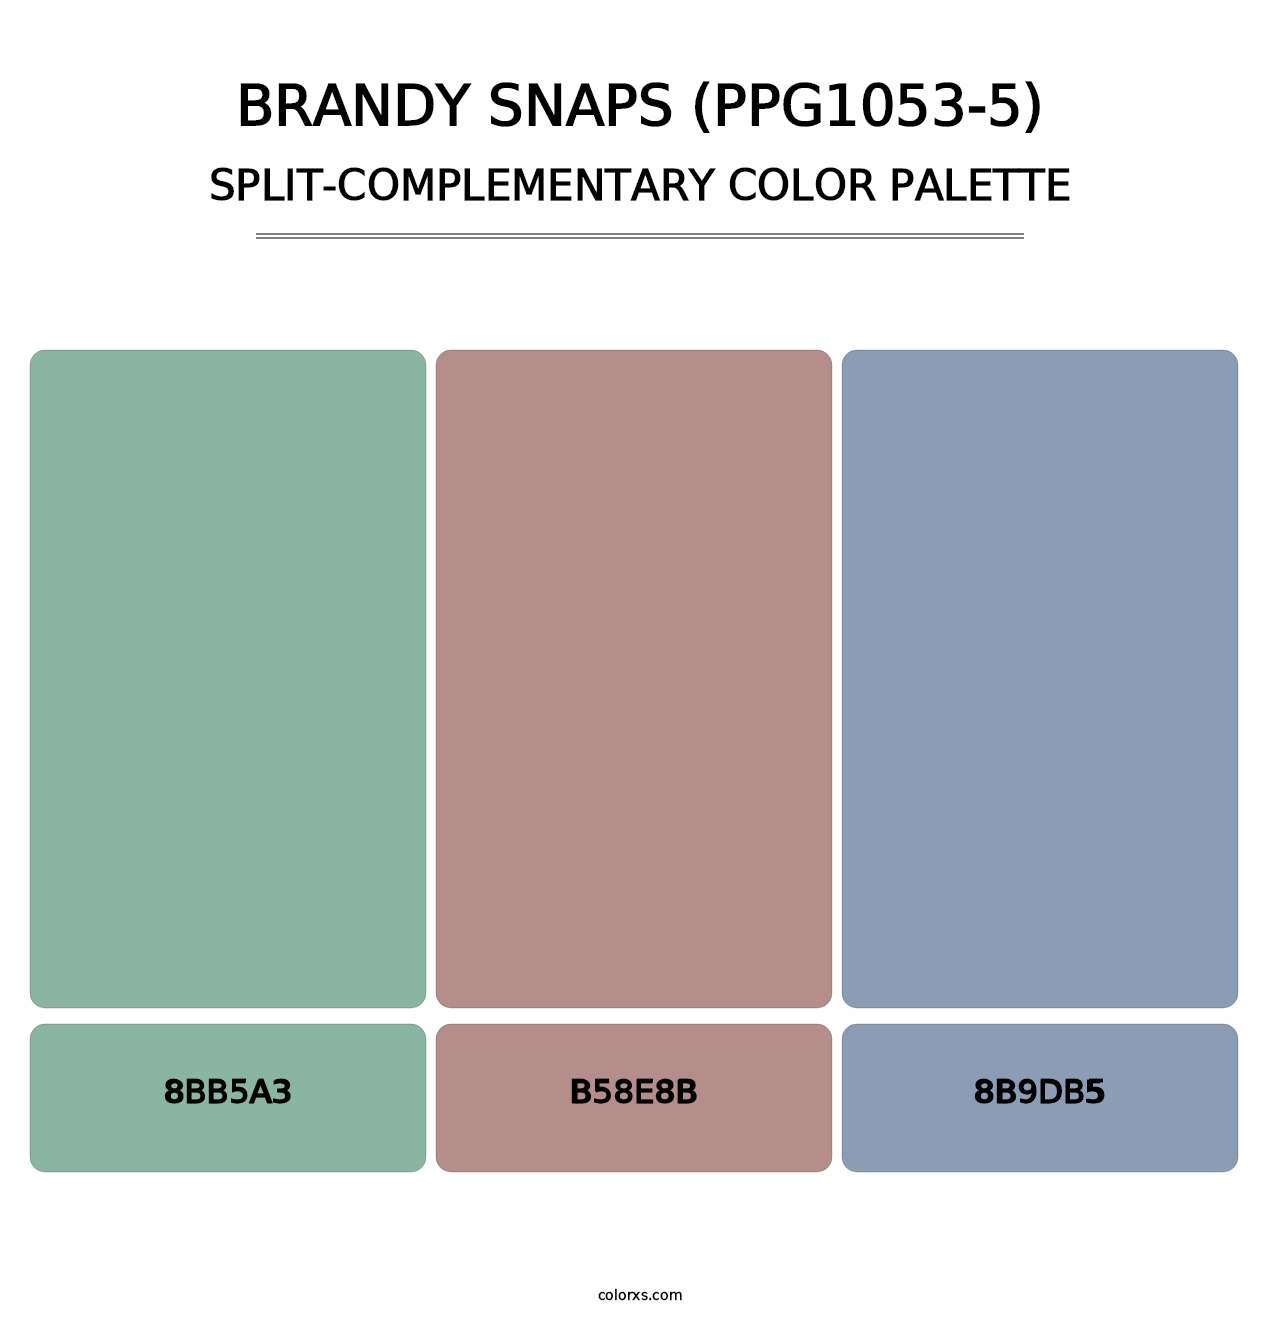 Brandy Snaps (PPG1053-5) - Split-Complementary Color Palette